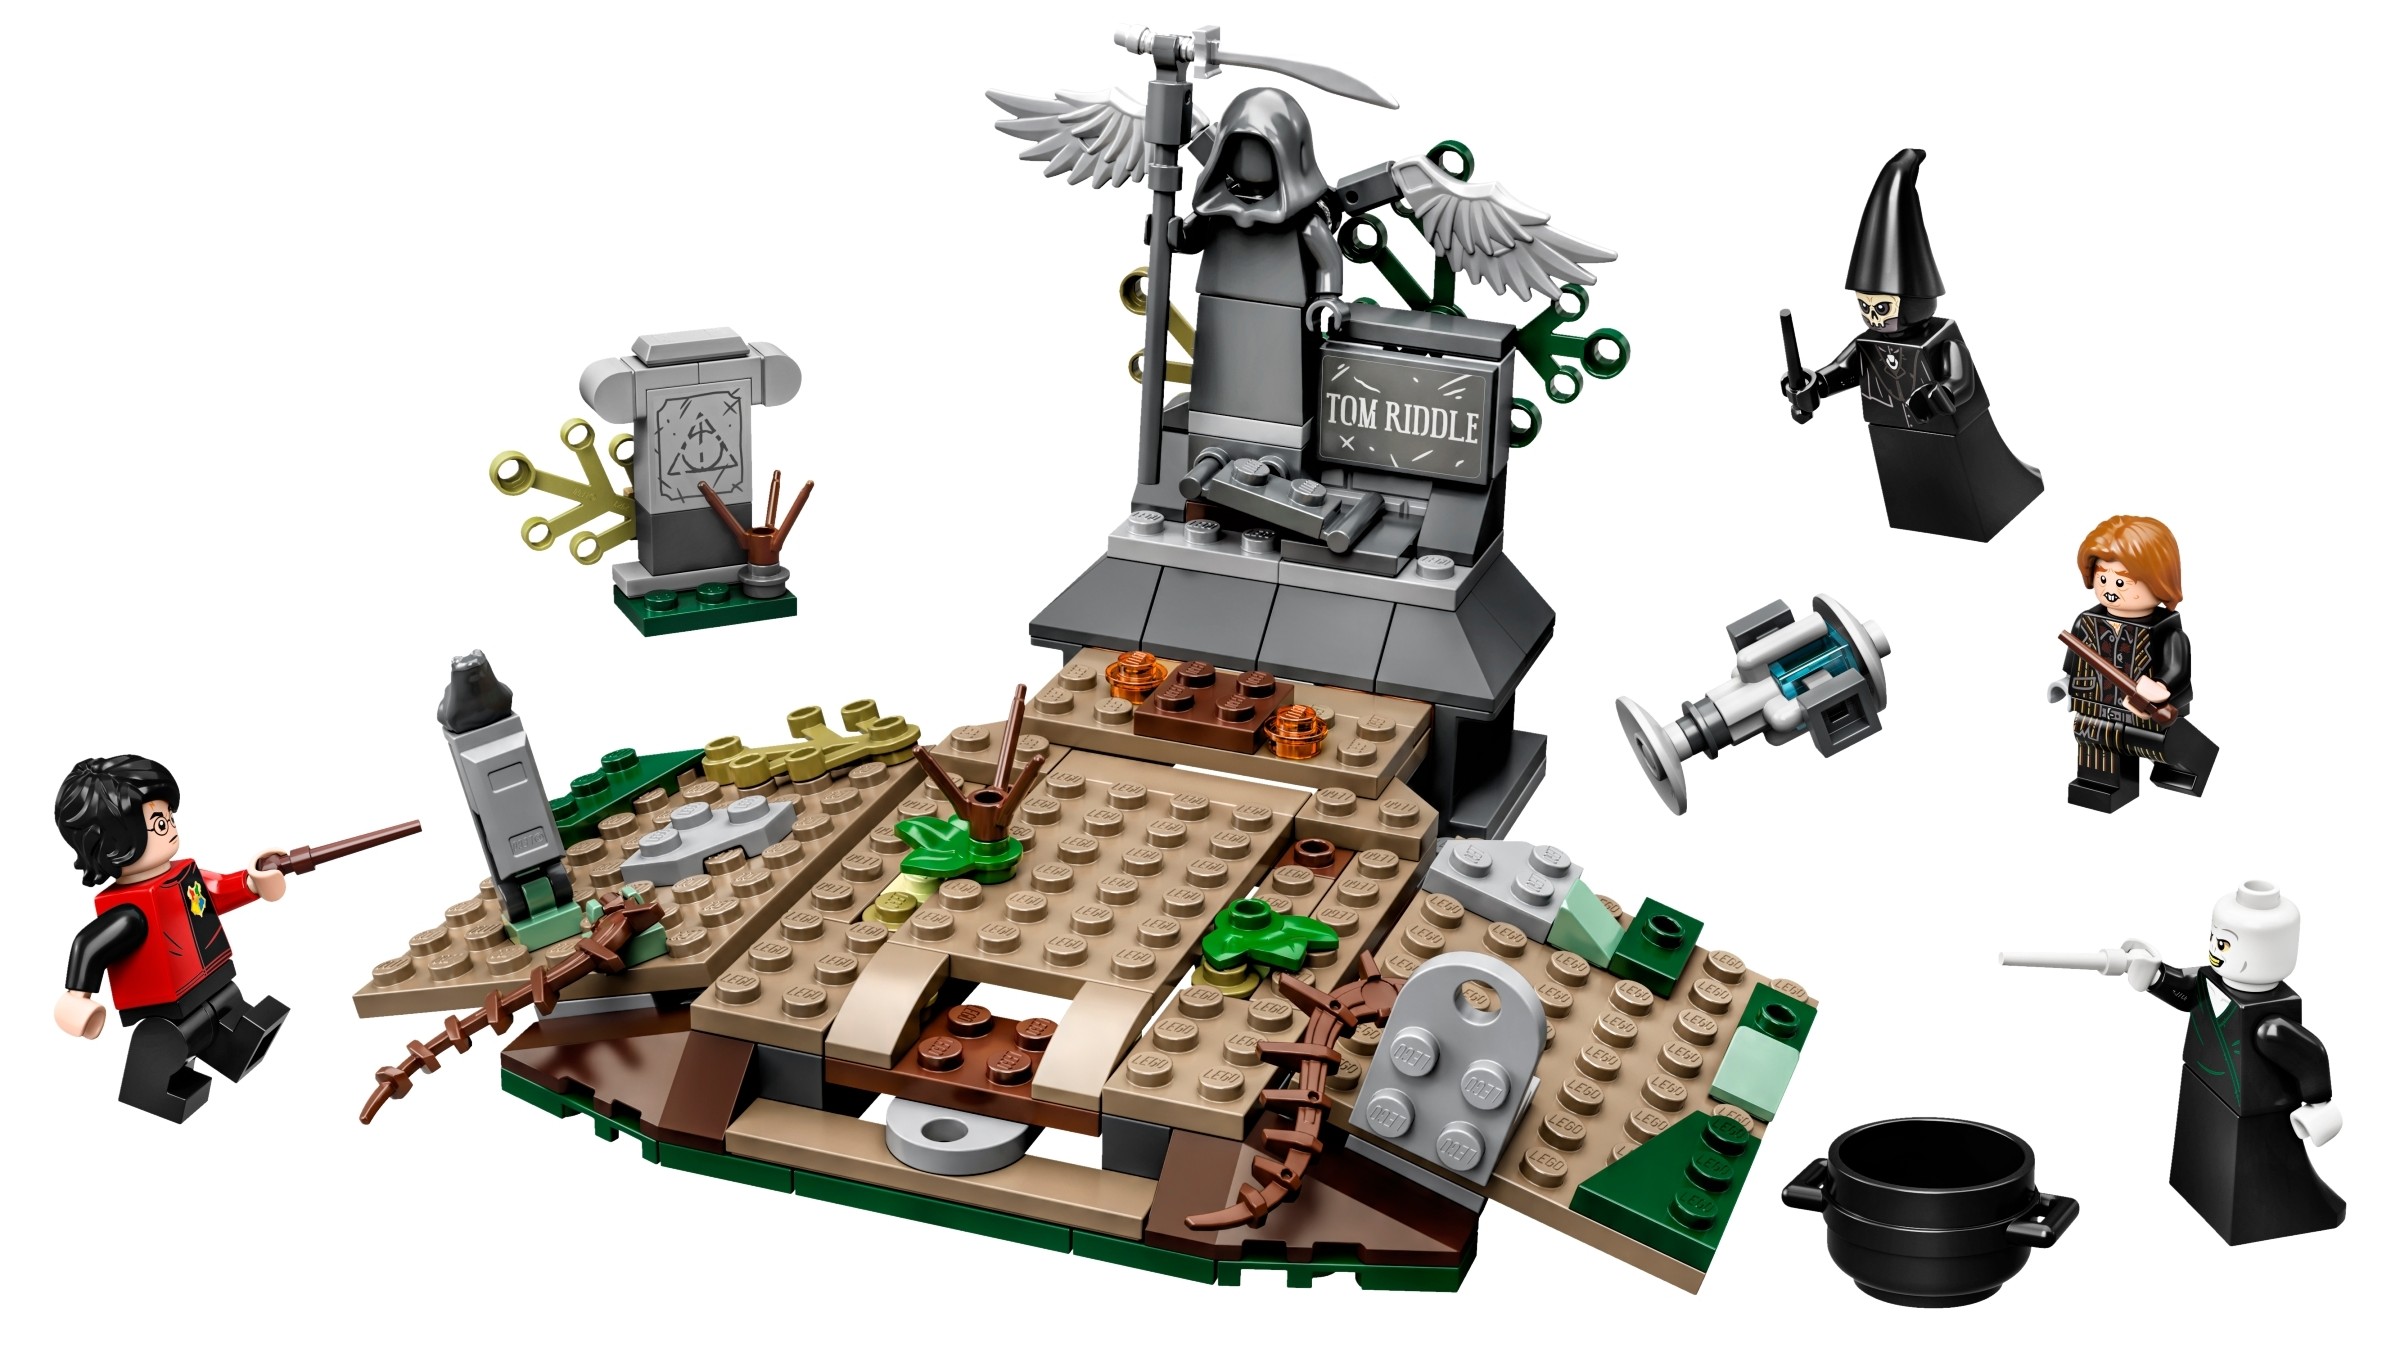 Lego Harry Potter: Graveyard scene and minifigures